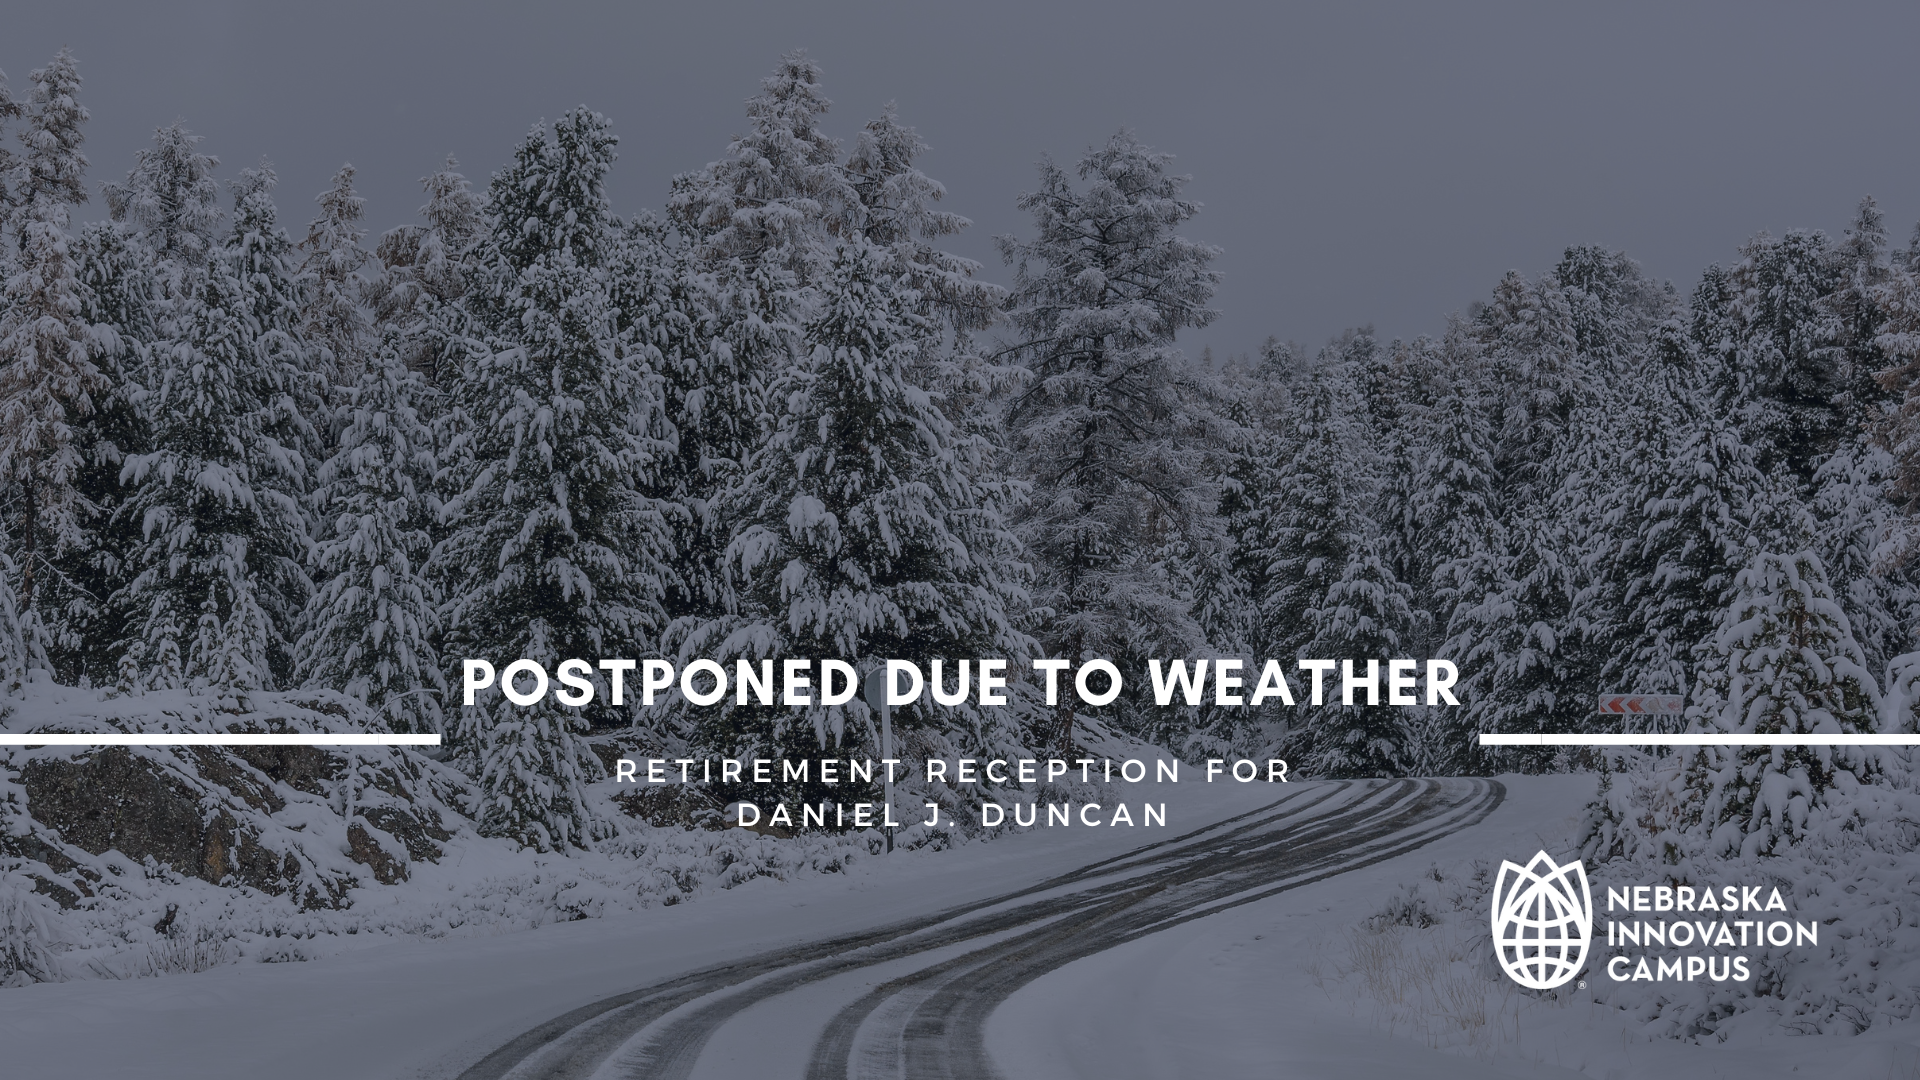 Daniel J. Duncan's retirement reception scheduled for Jan. 18 is postponed due to weather.